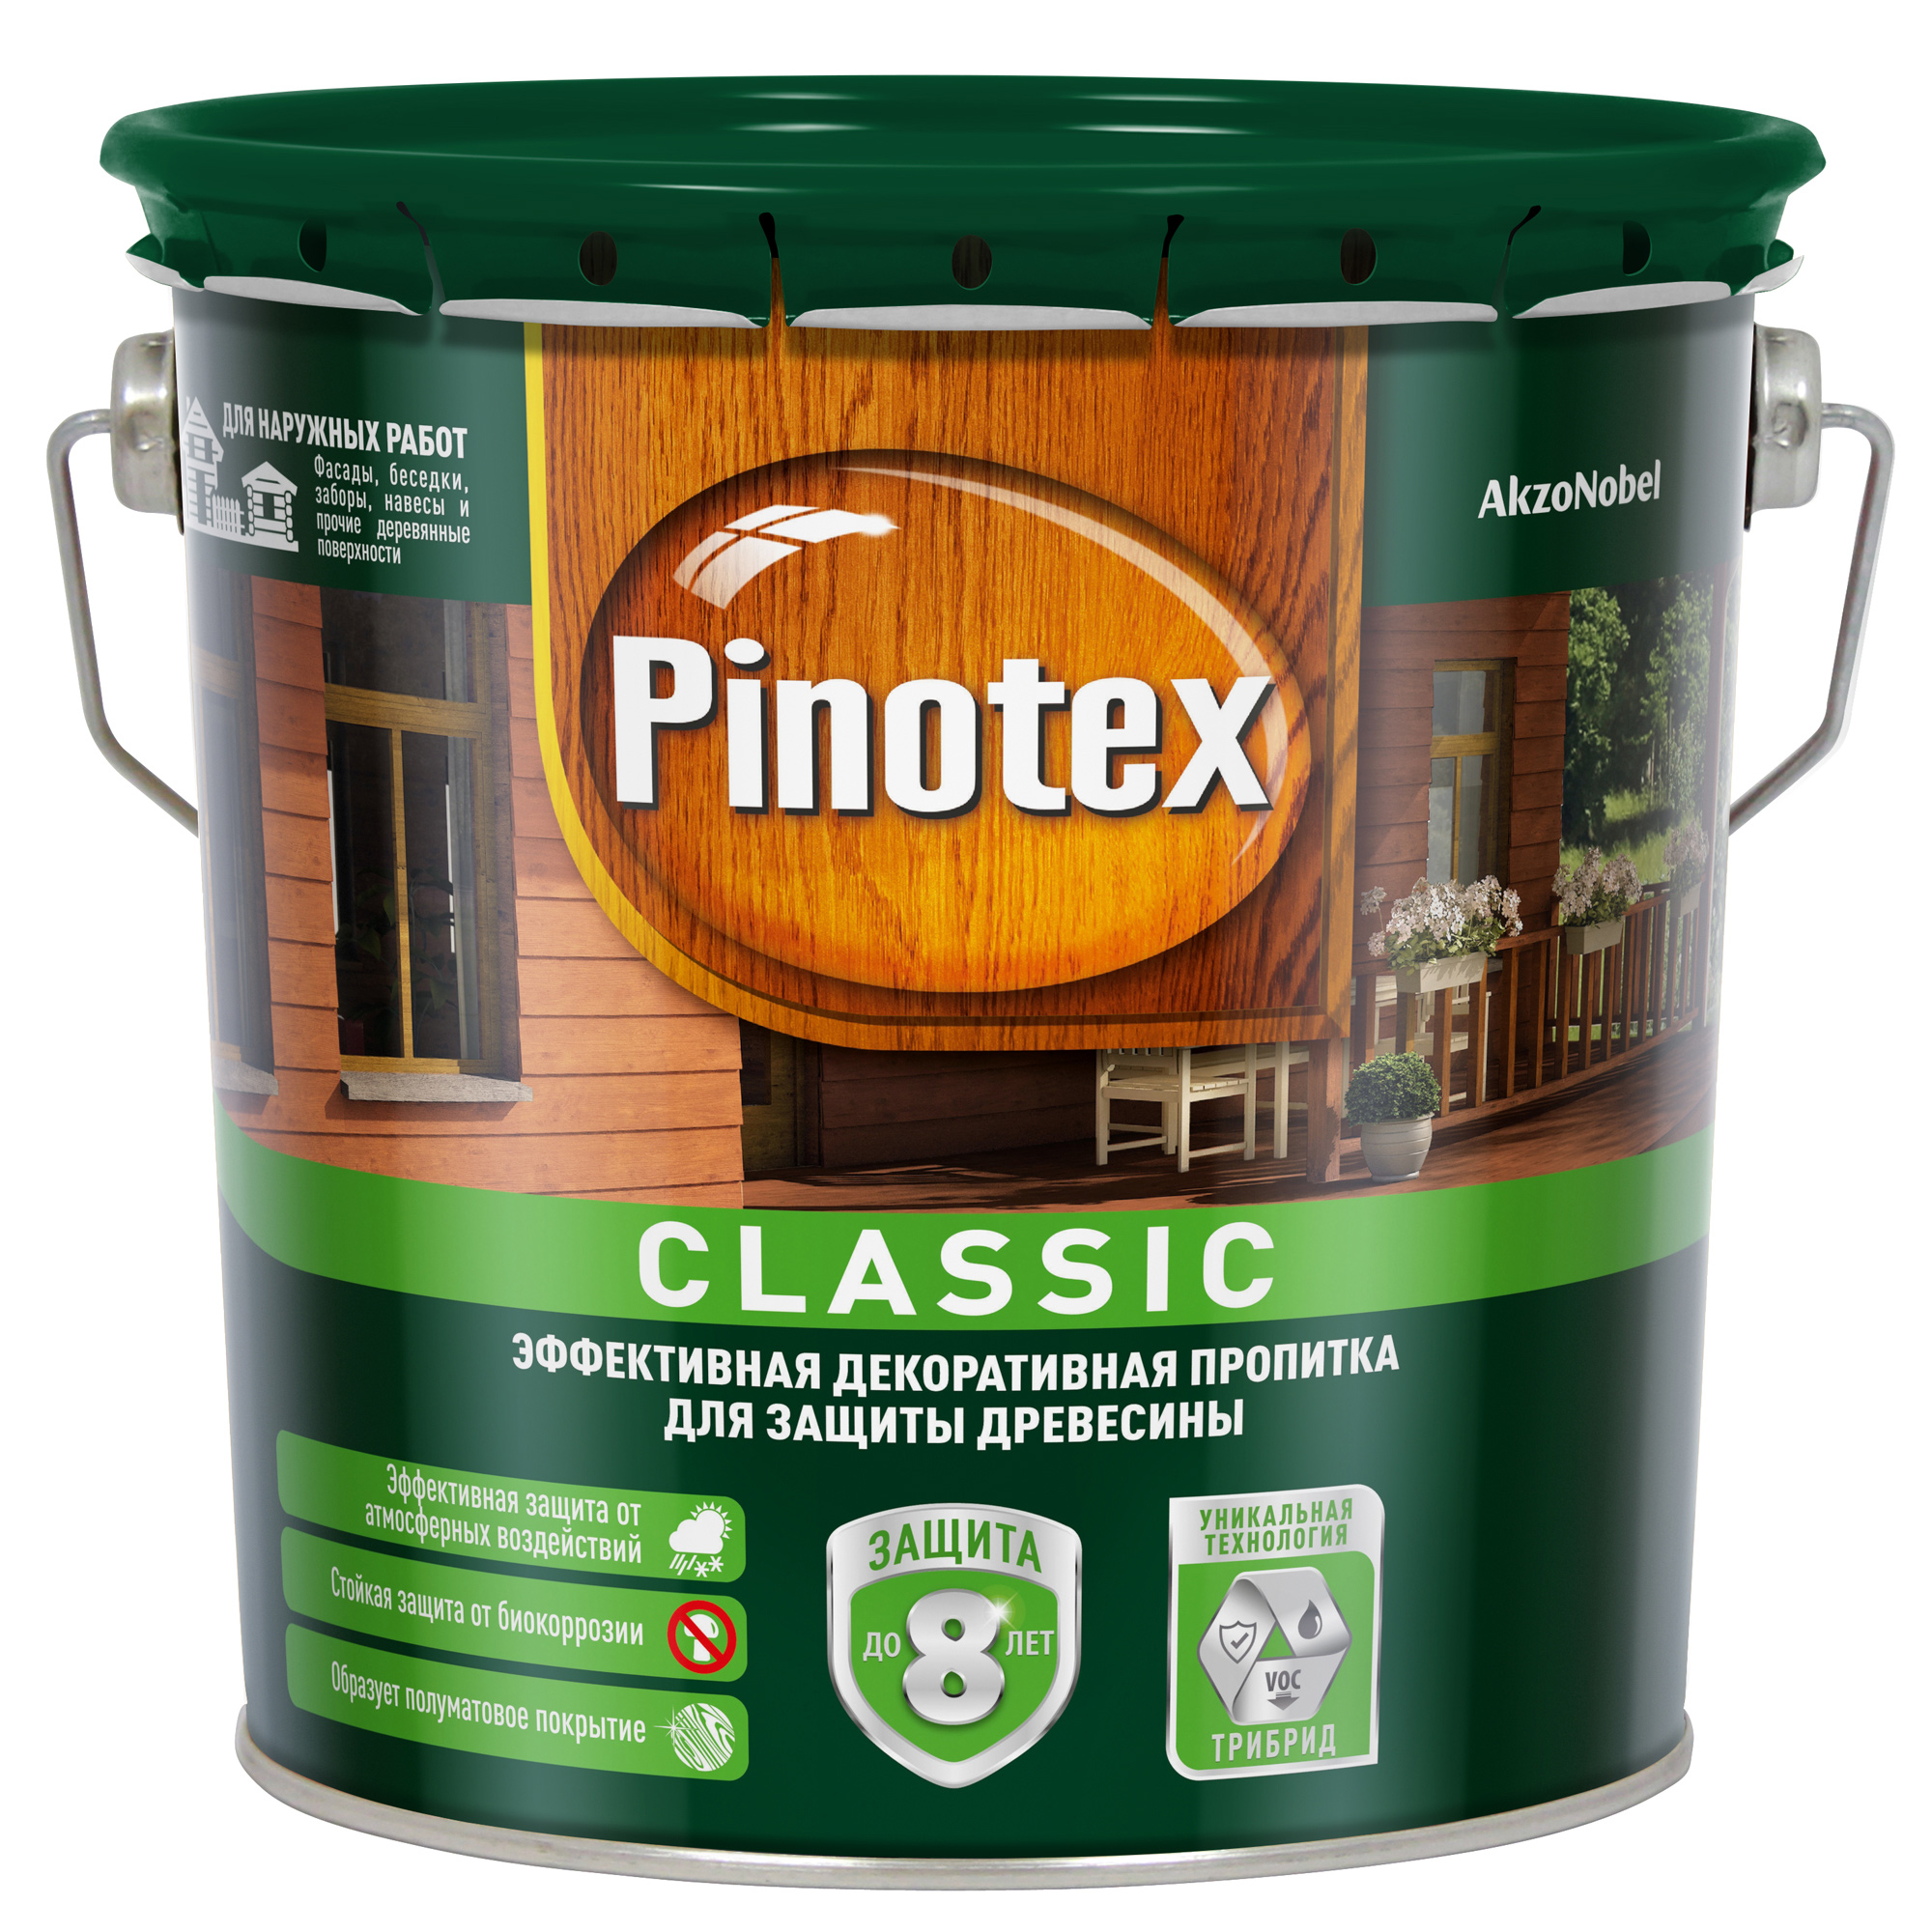 Пропитка Pinotex classic 2.7л clr база